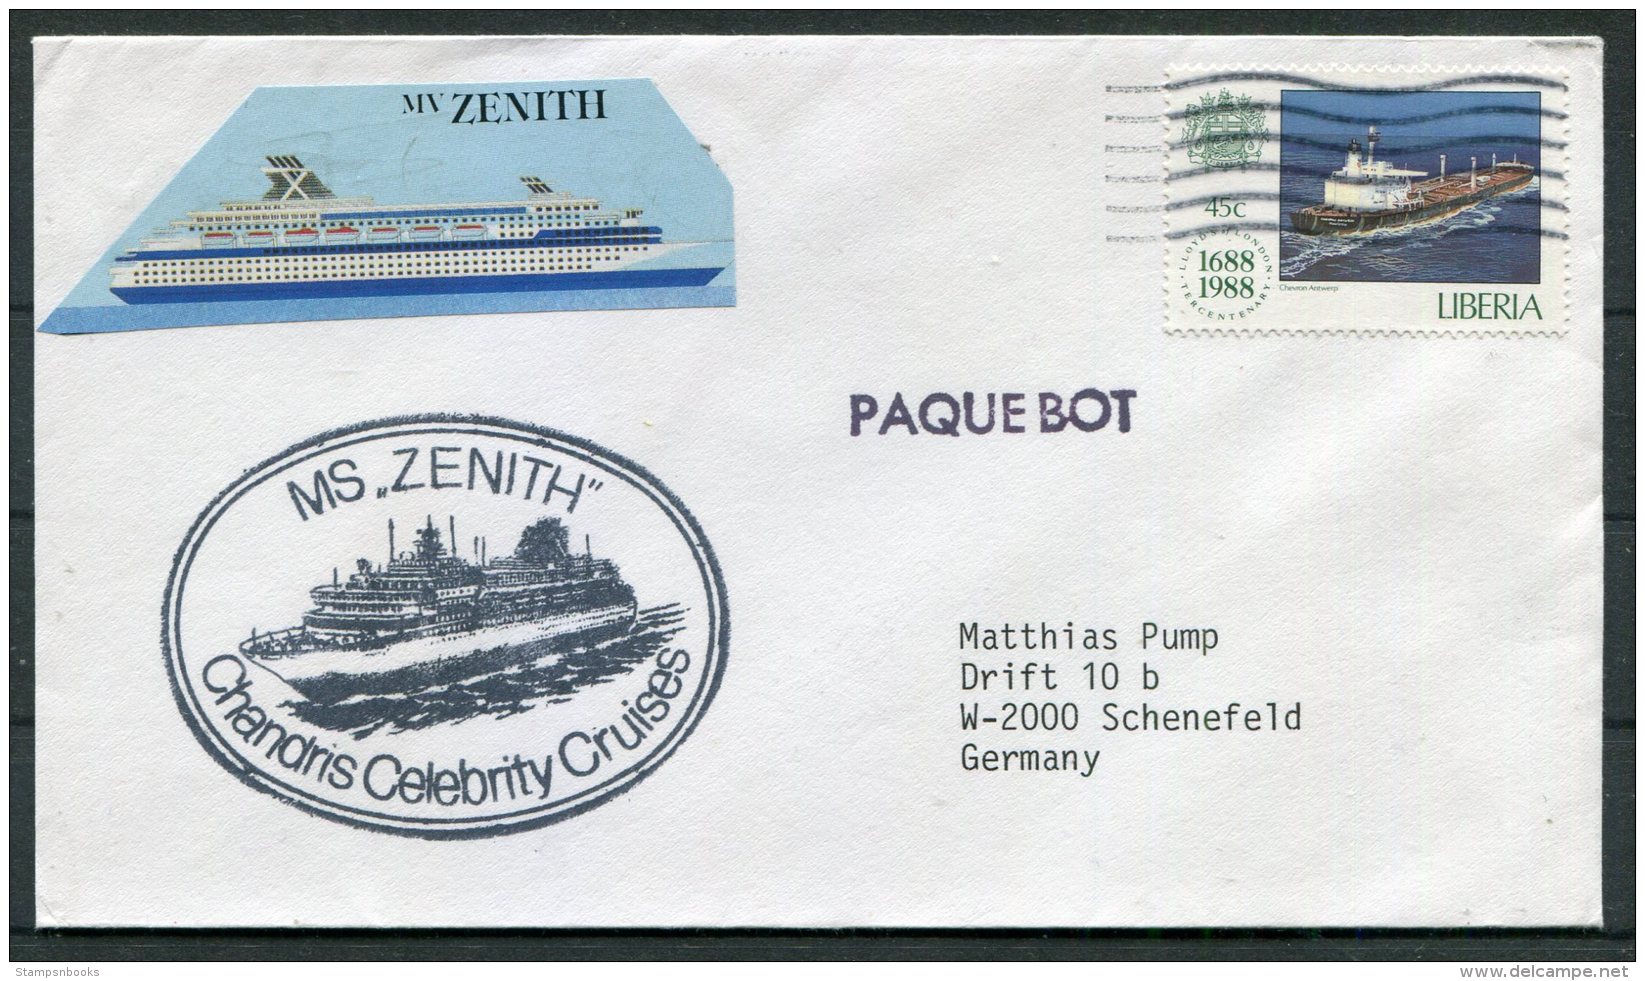 Liberia MS ZENITH Paquebot Ship Cover - Liberia